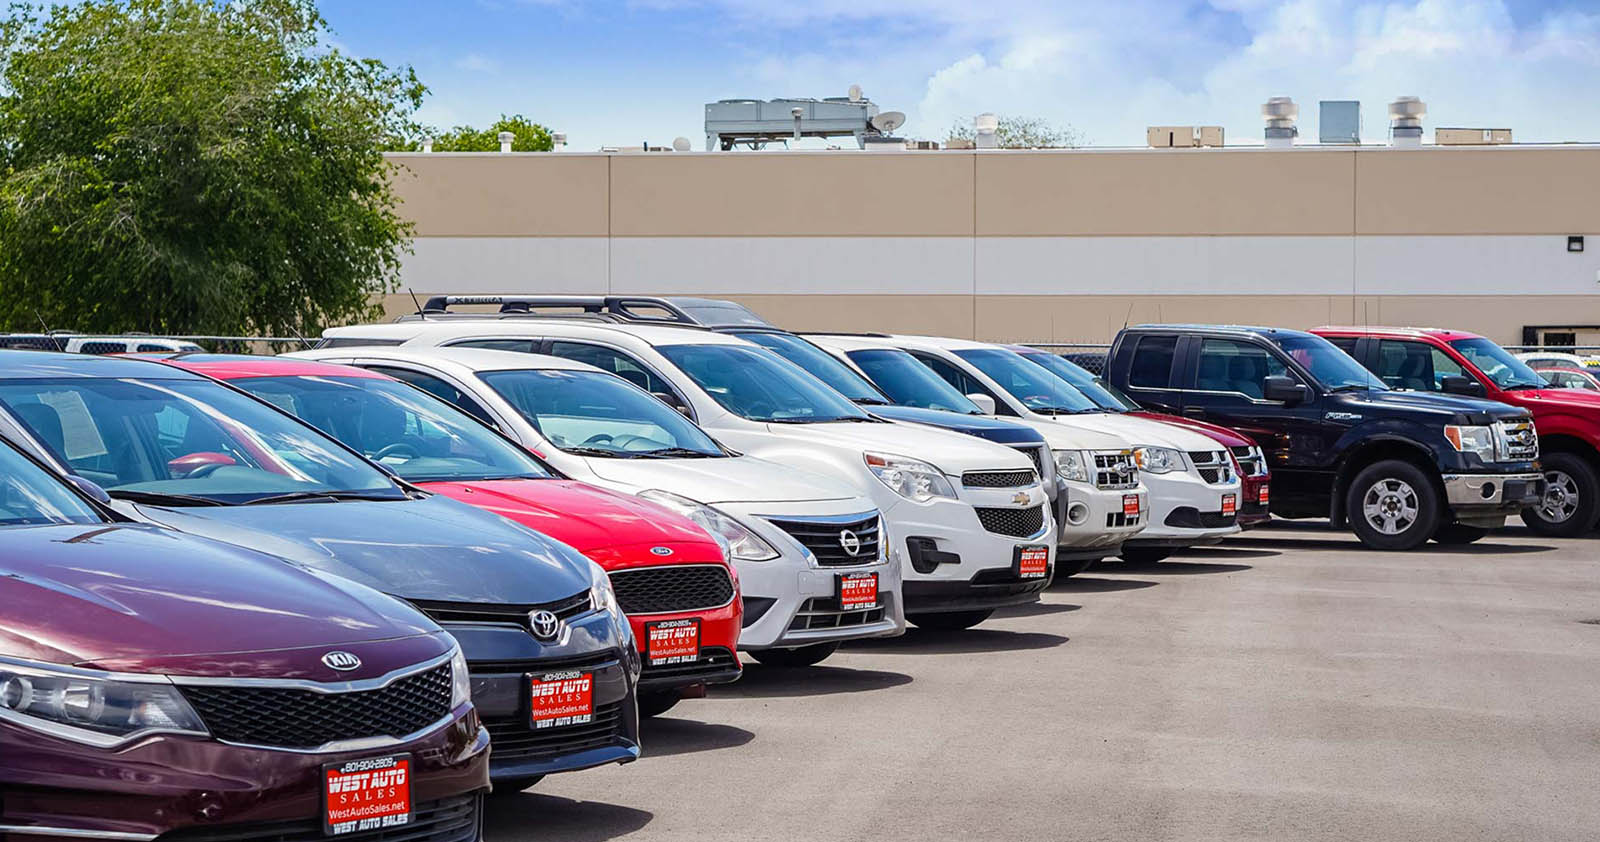 Various vehicles parked outdoors at a car dealership lot